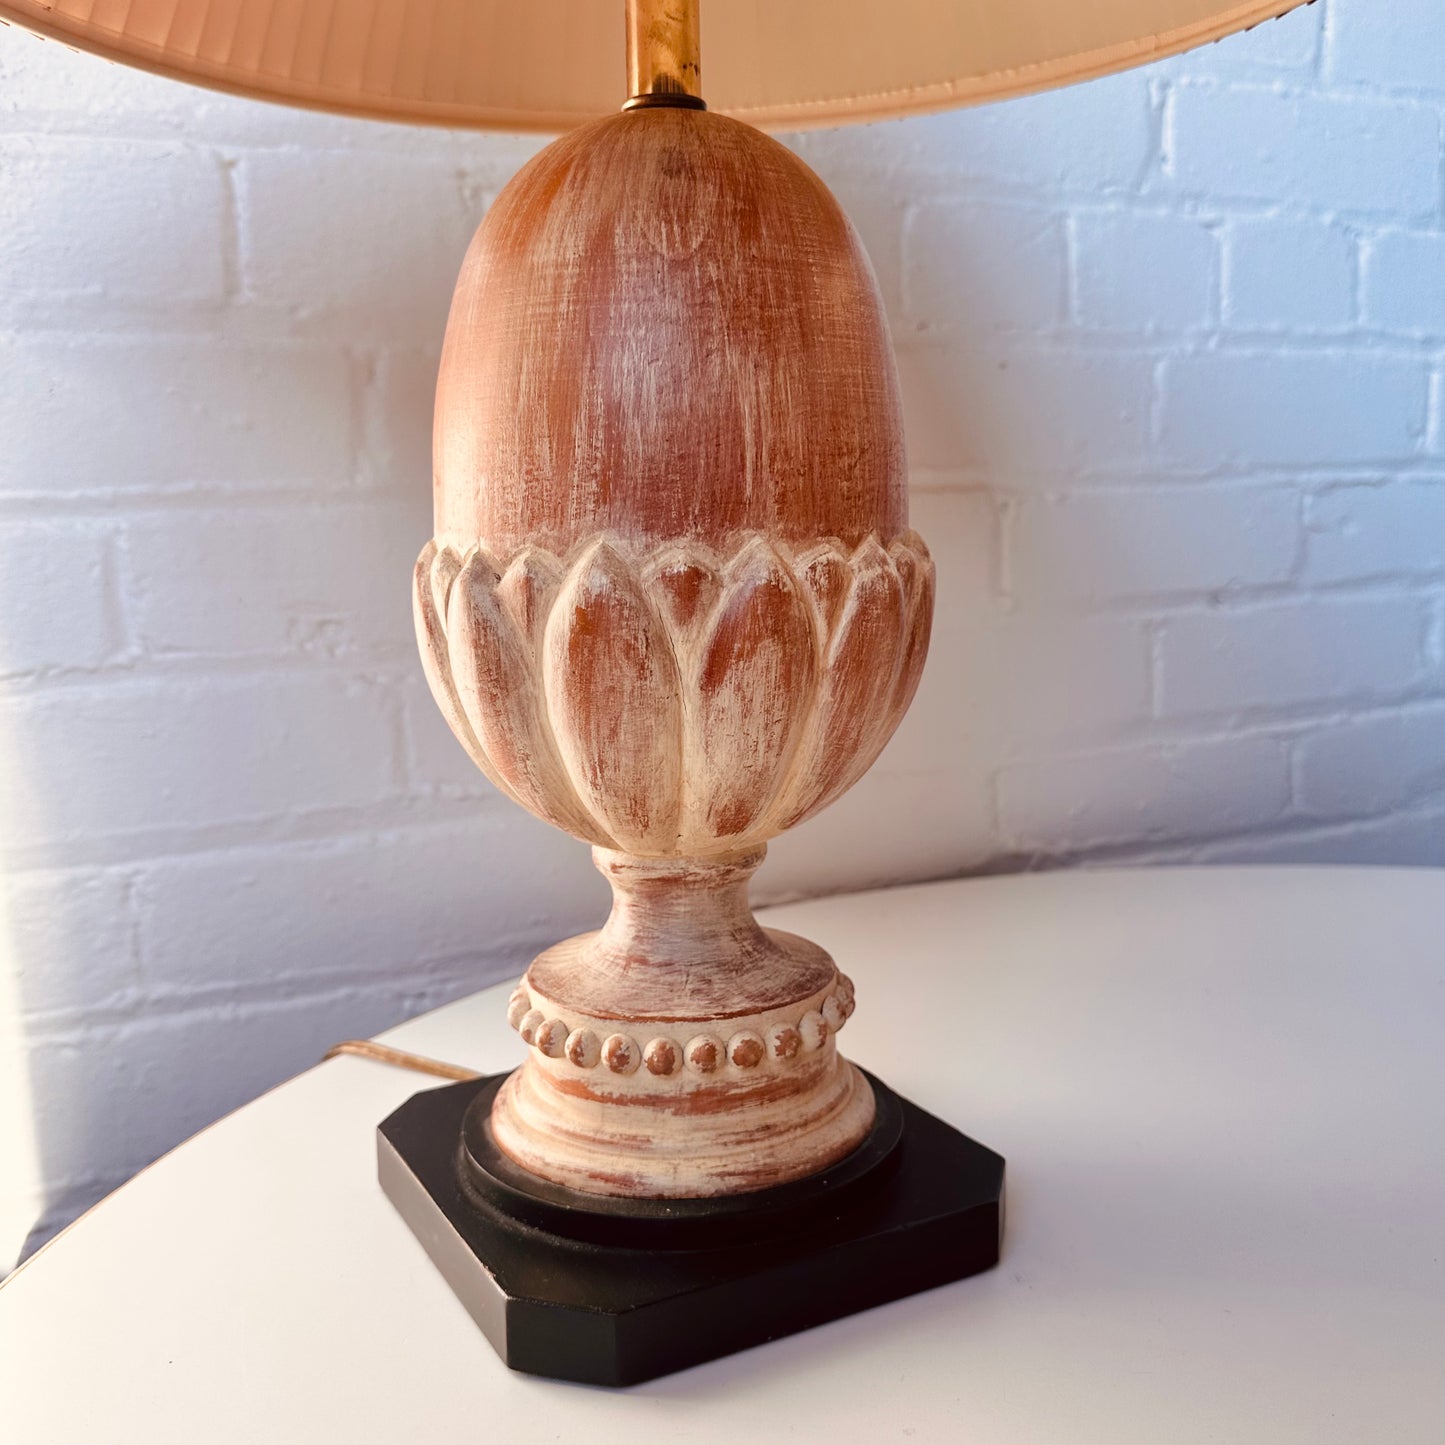 SARREID OF SPAIN OLD WORLD CARVED WOOD TABLE LAMP